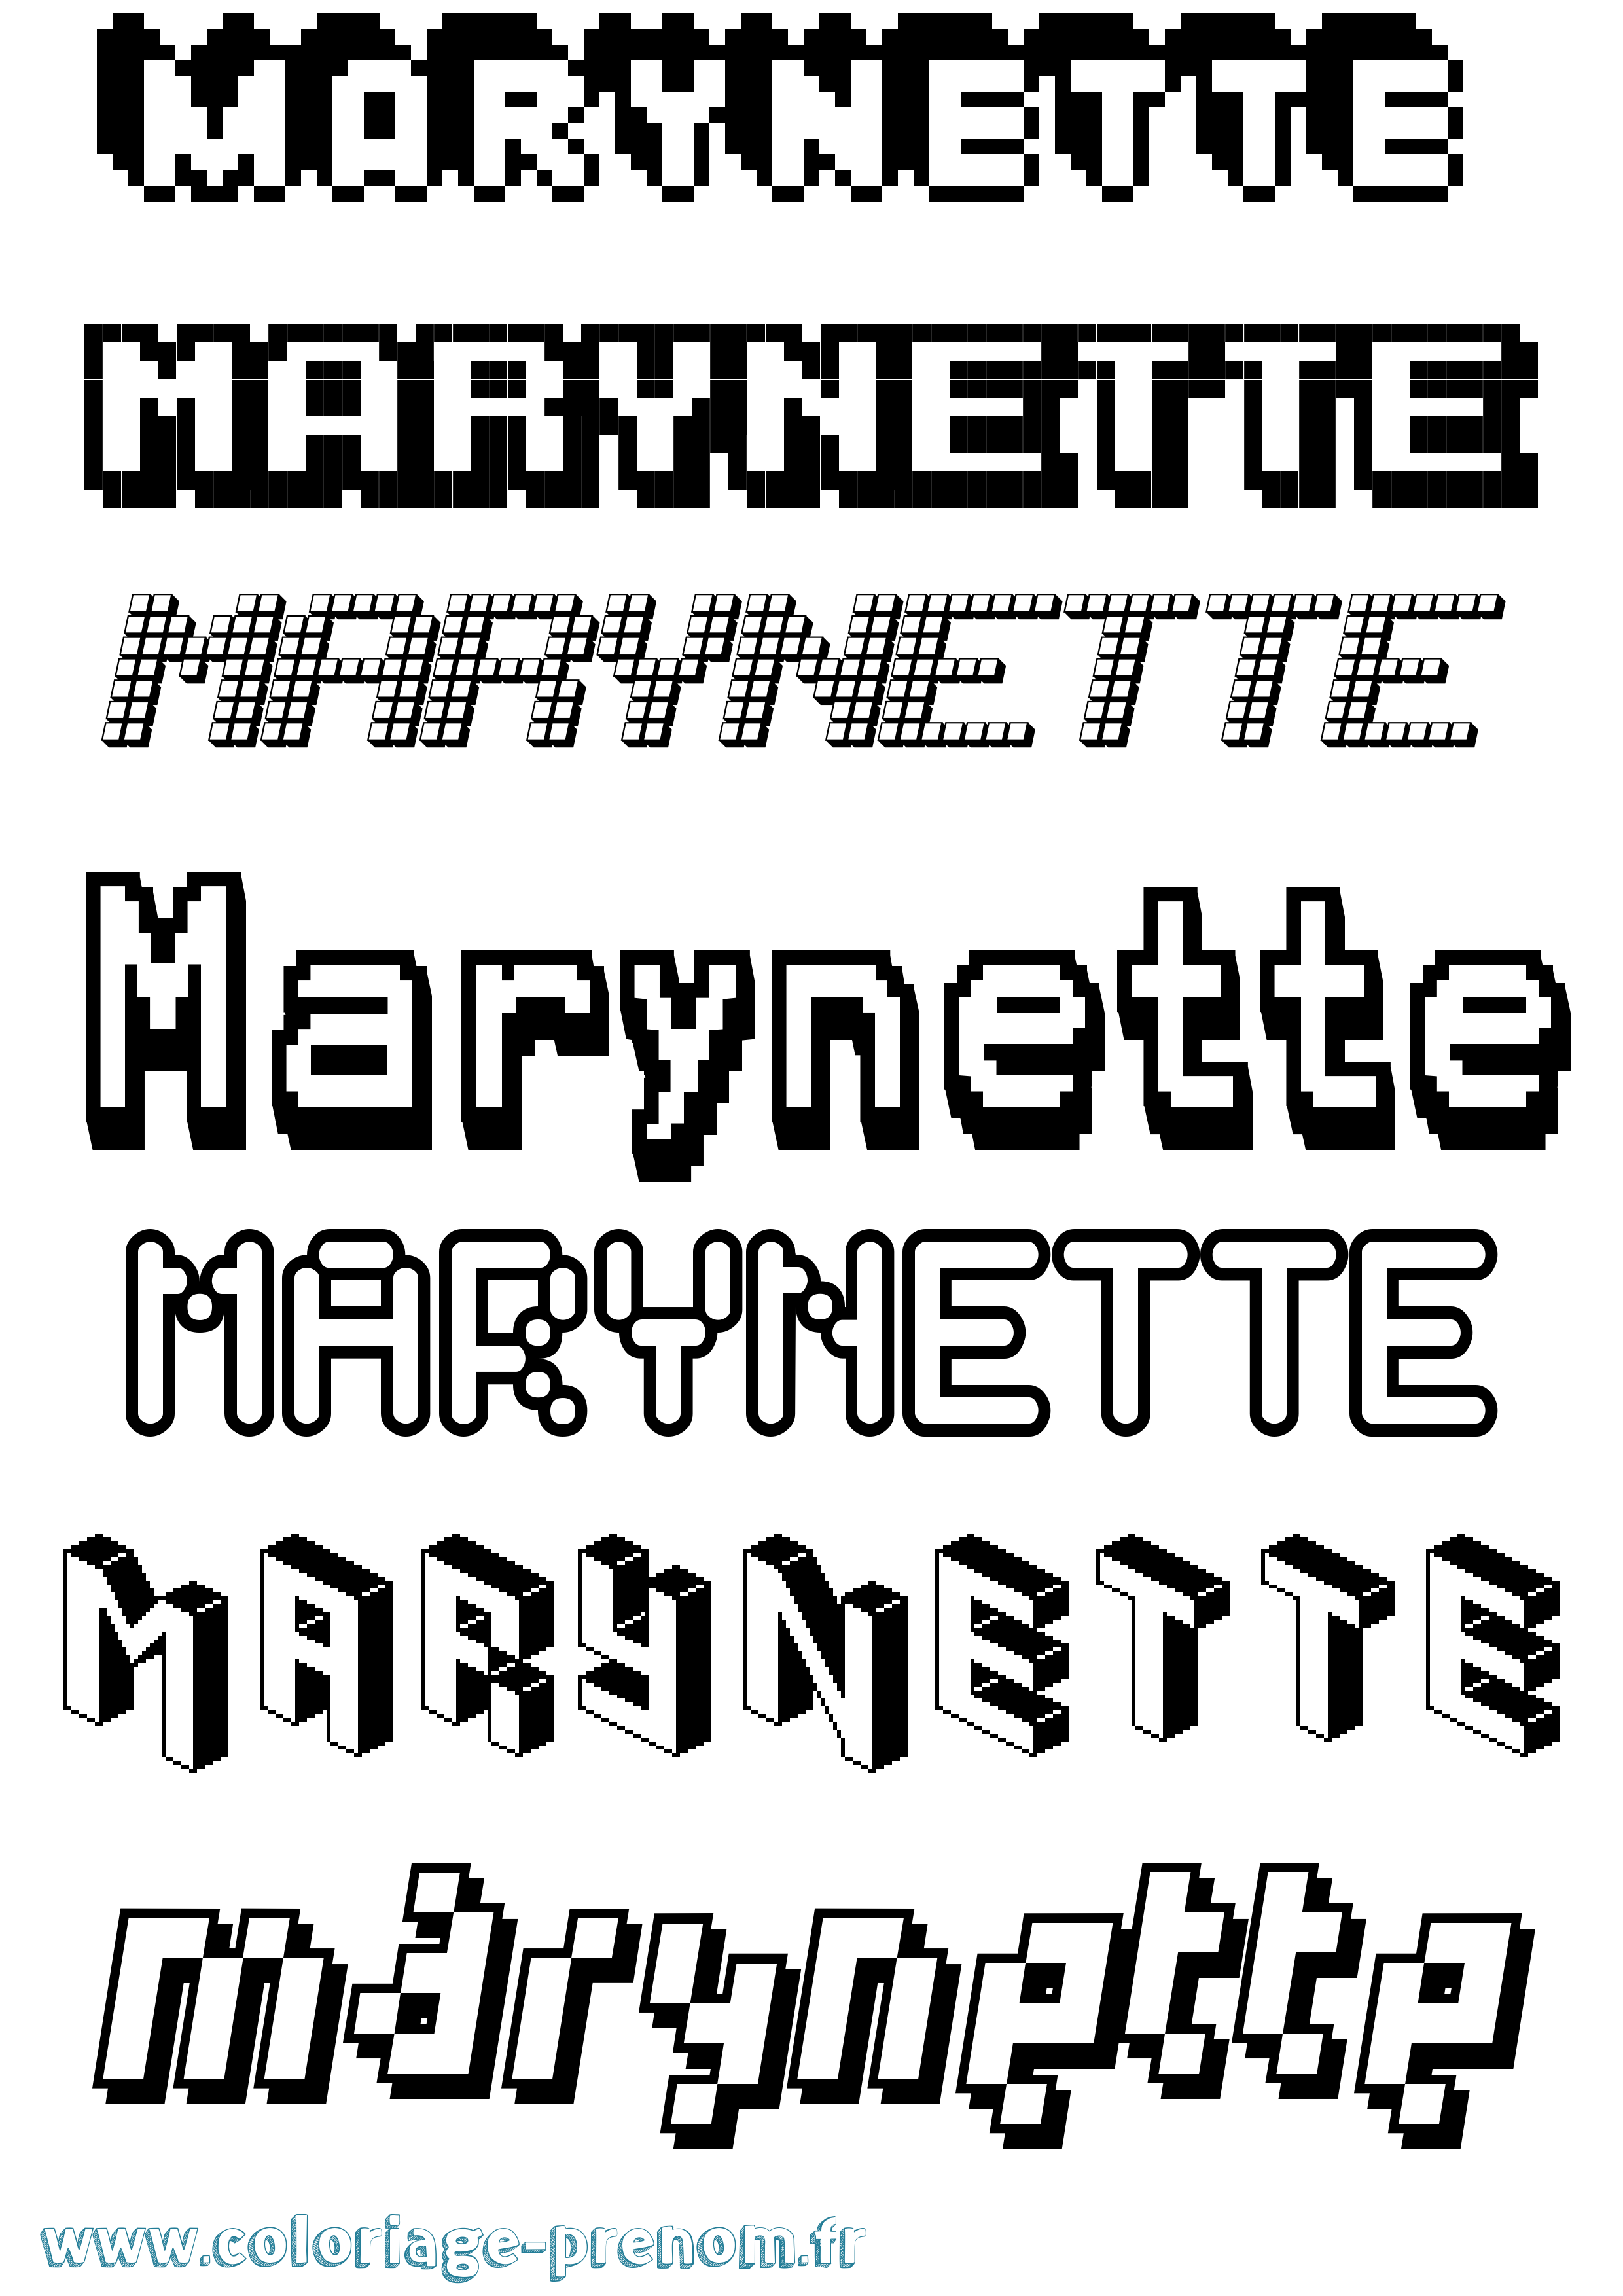 Coloriage prénom Marynette Pixel